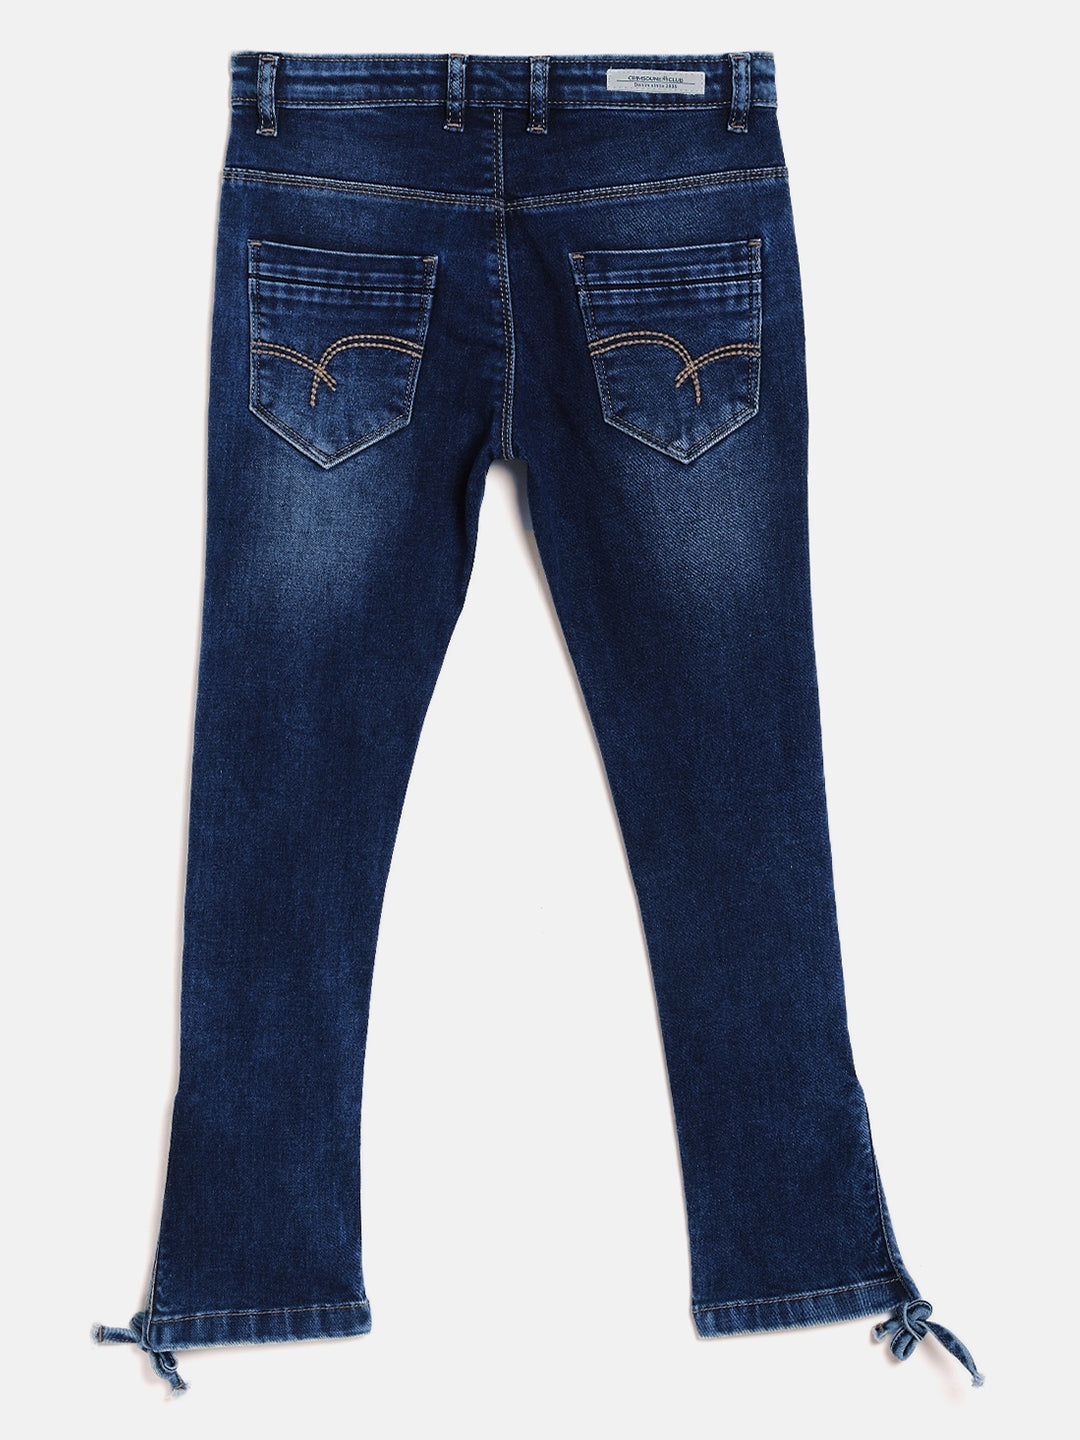 Blue jeans - Girls Jeans